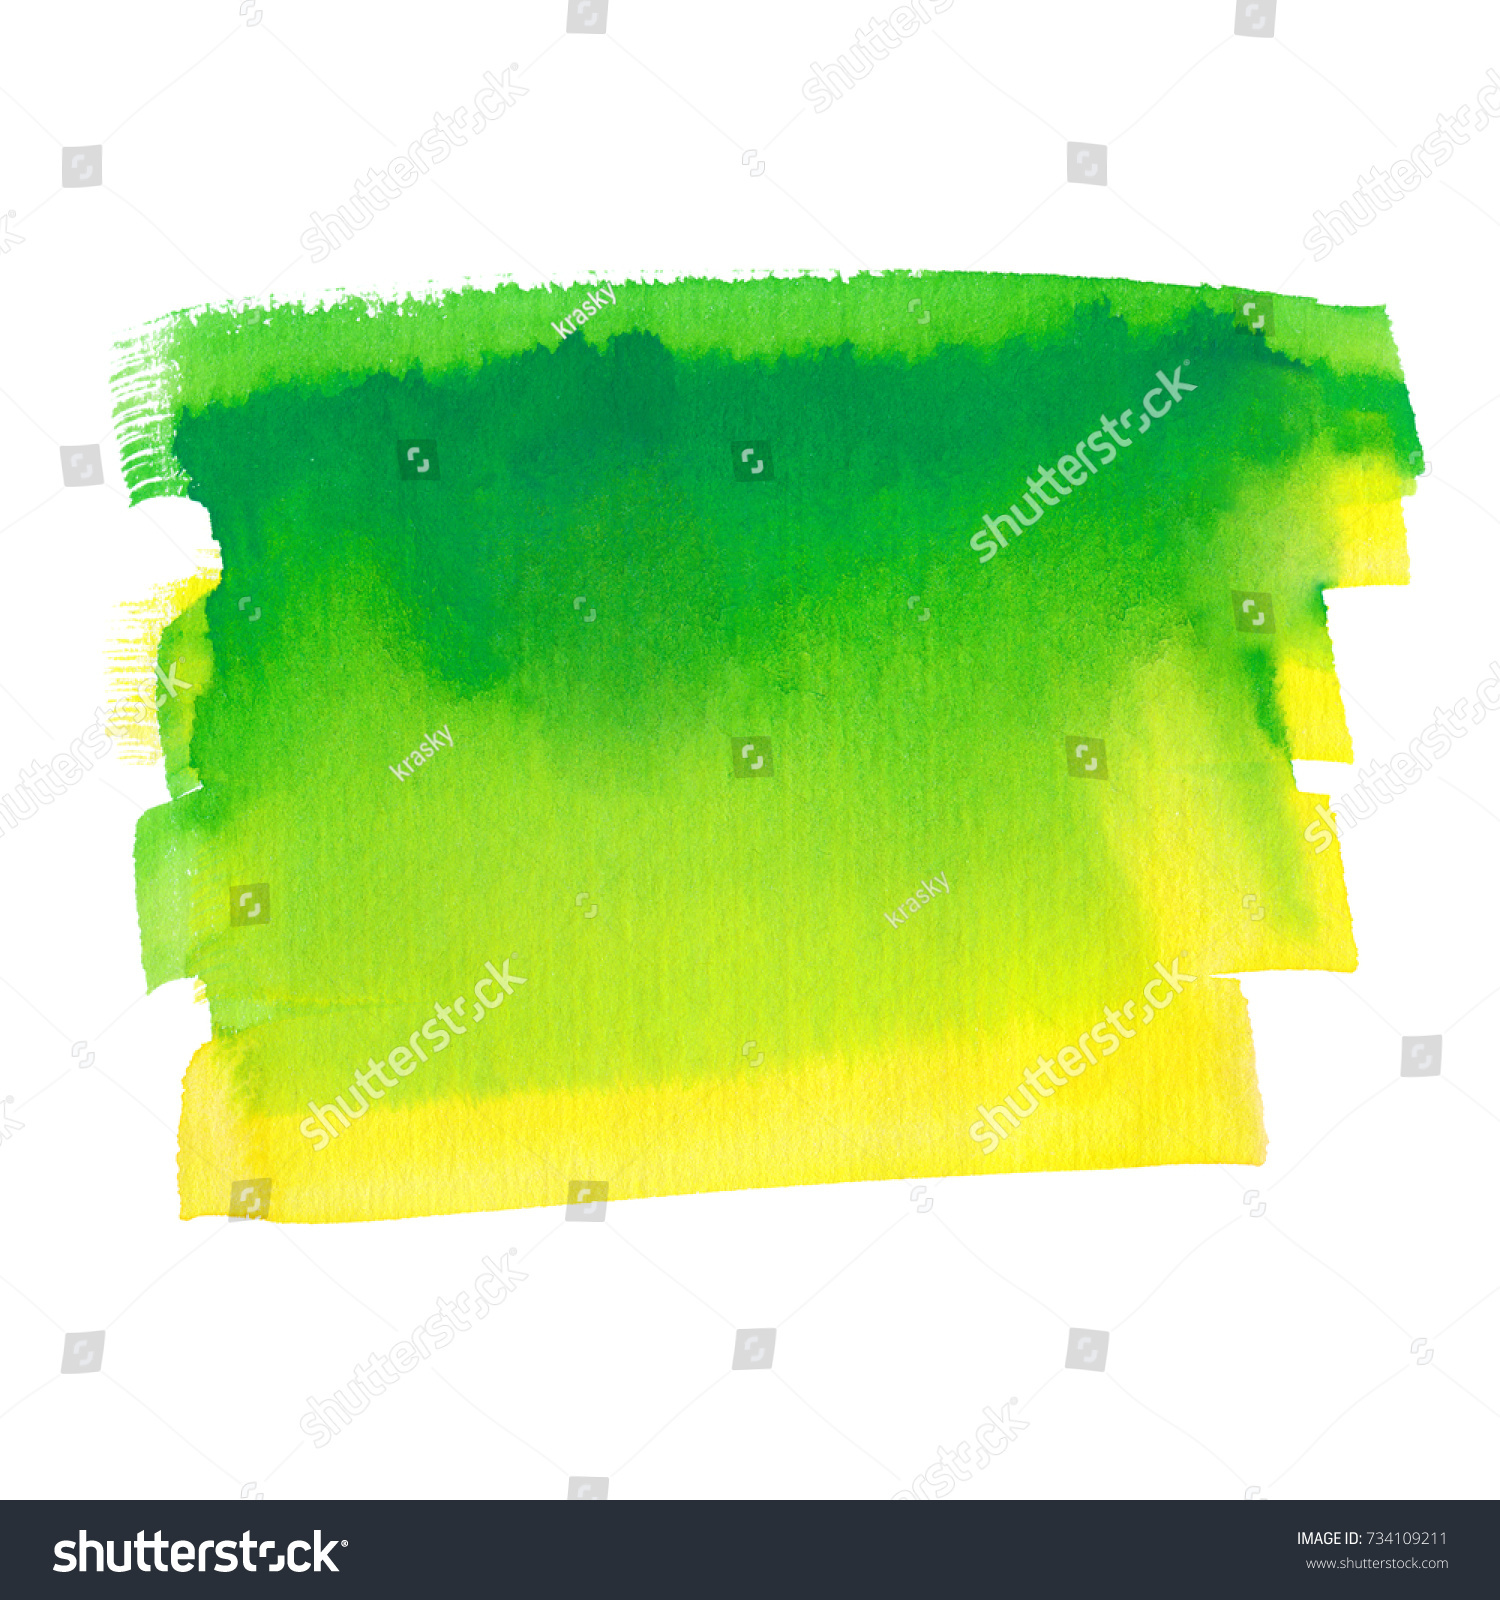 Hand Drawn Green Yellow Abstract Watercolor Stock Photo 734109211 ...